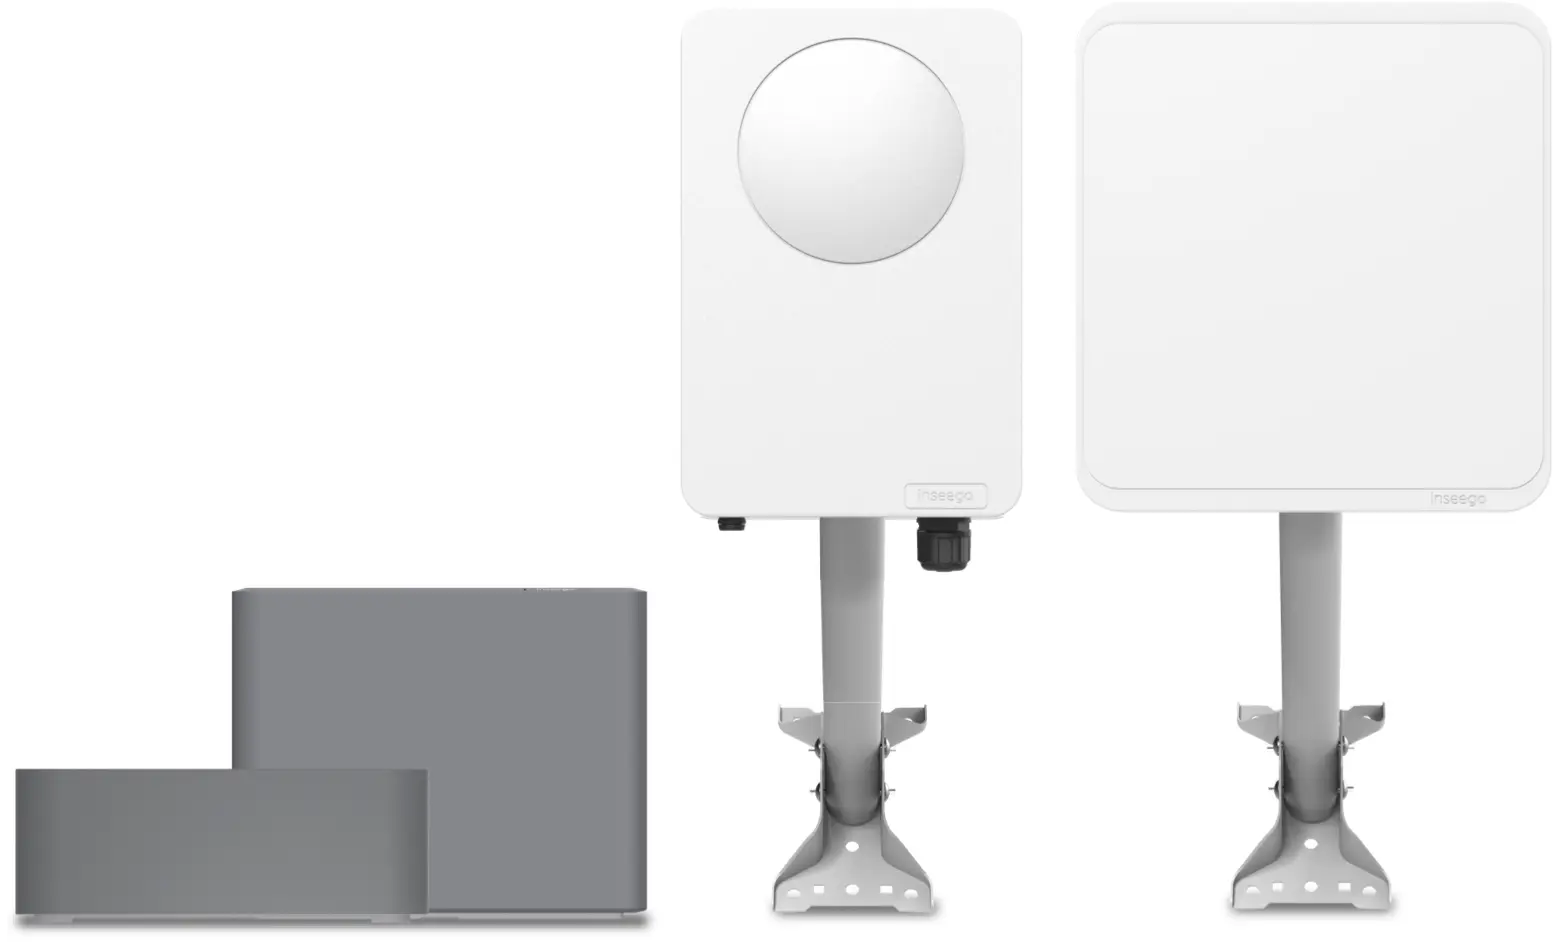 Inseego's Fixed Wireless Access portfolio.